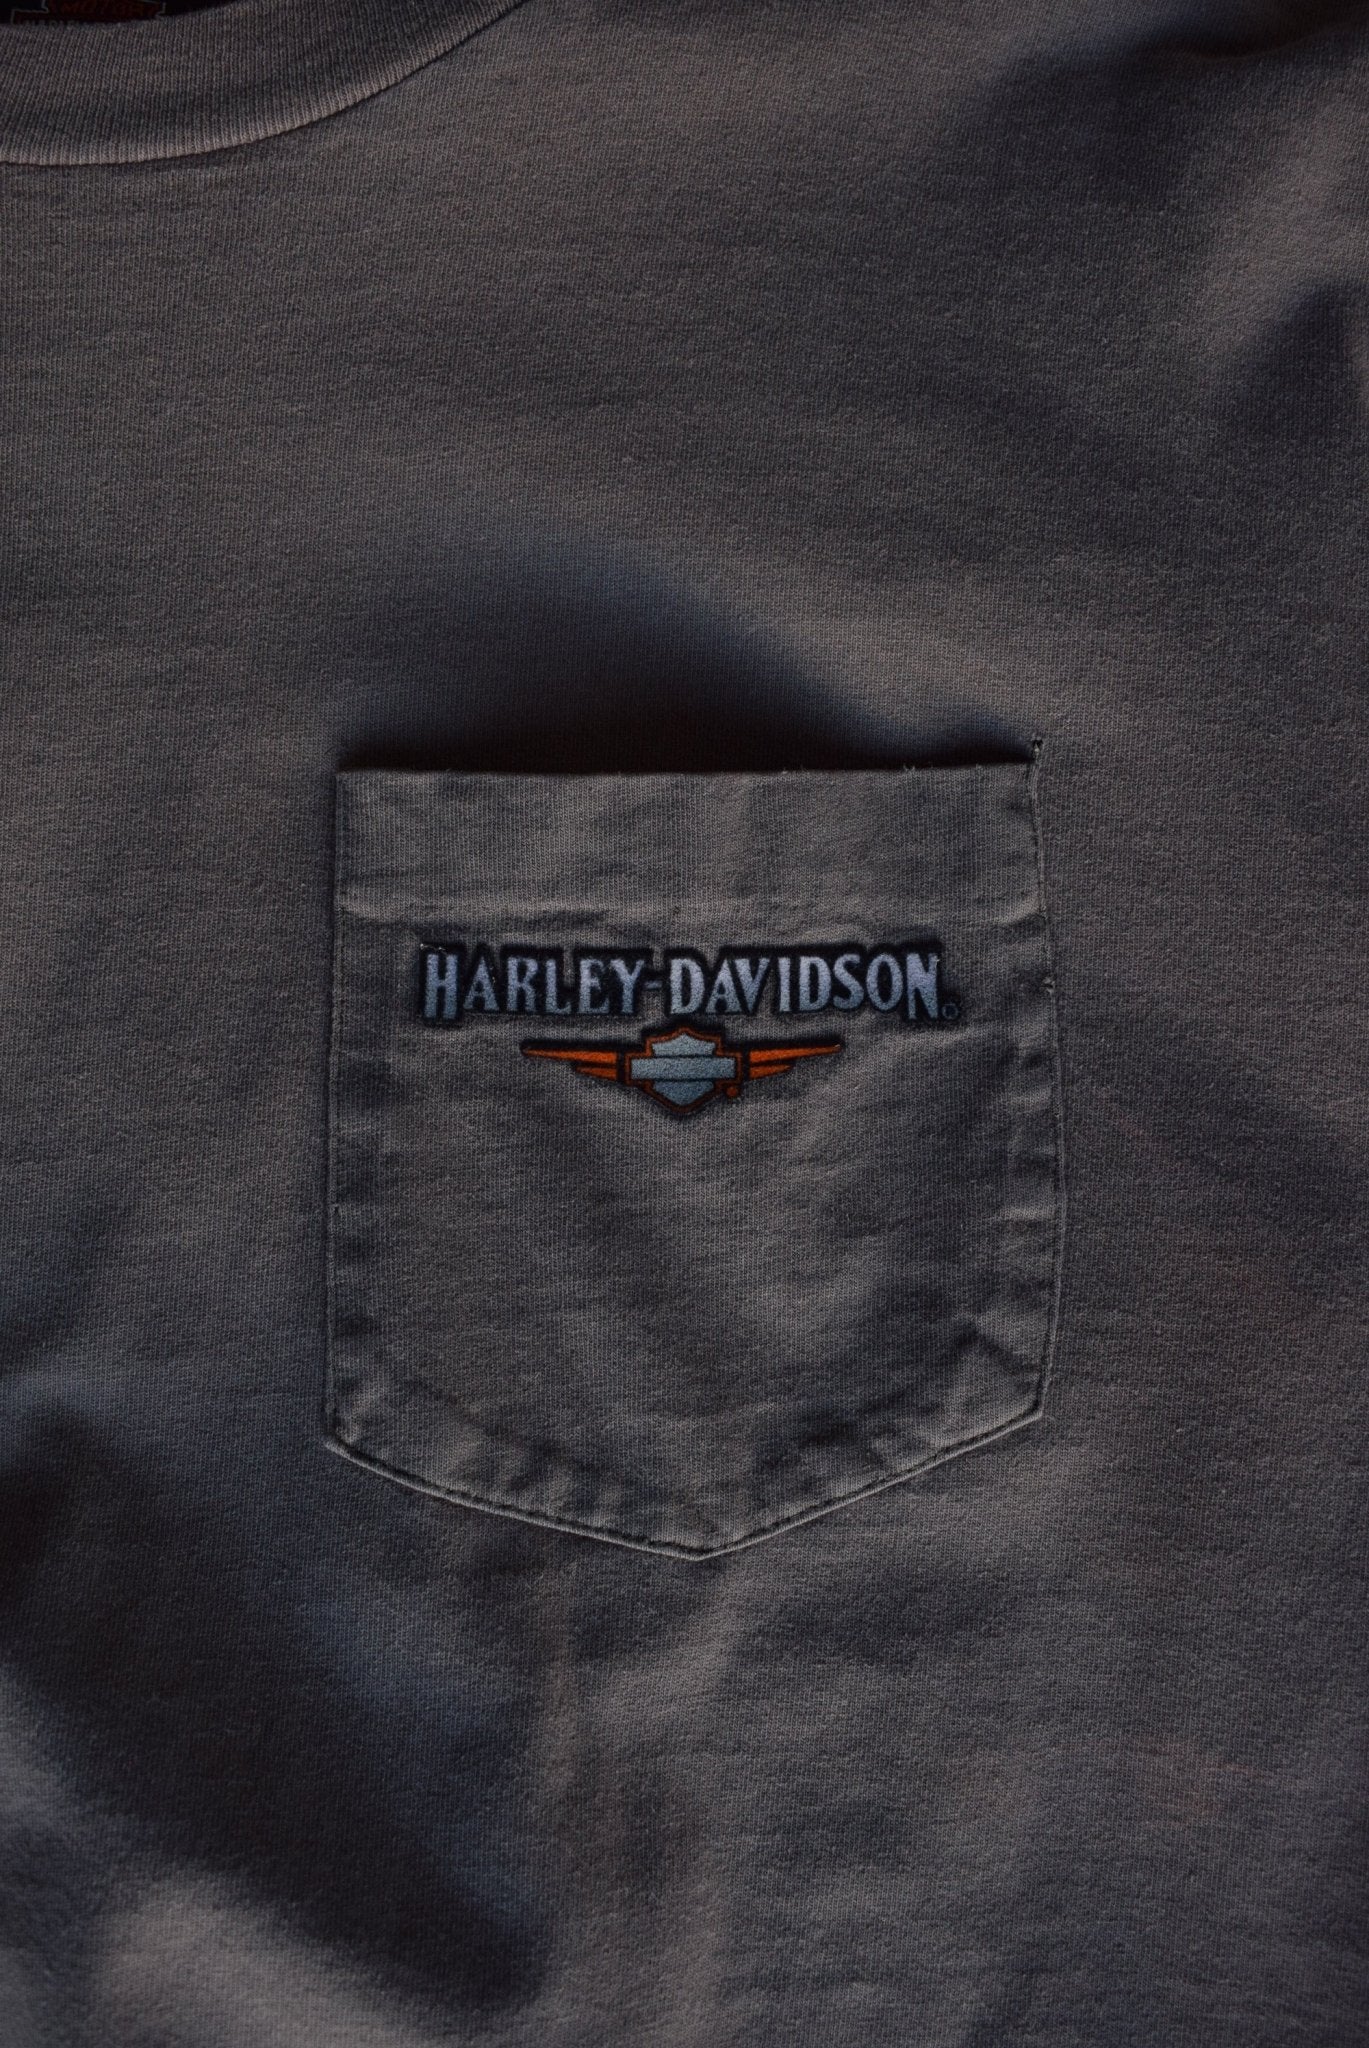 Vintage 90s Harley Davidson Embroidered Tee (XL) - Retrospective Store